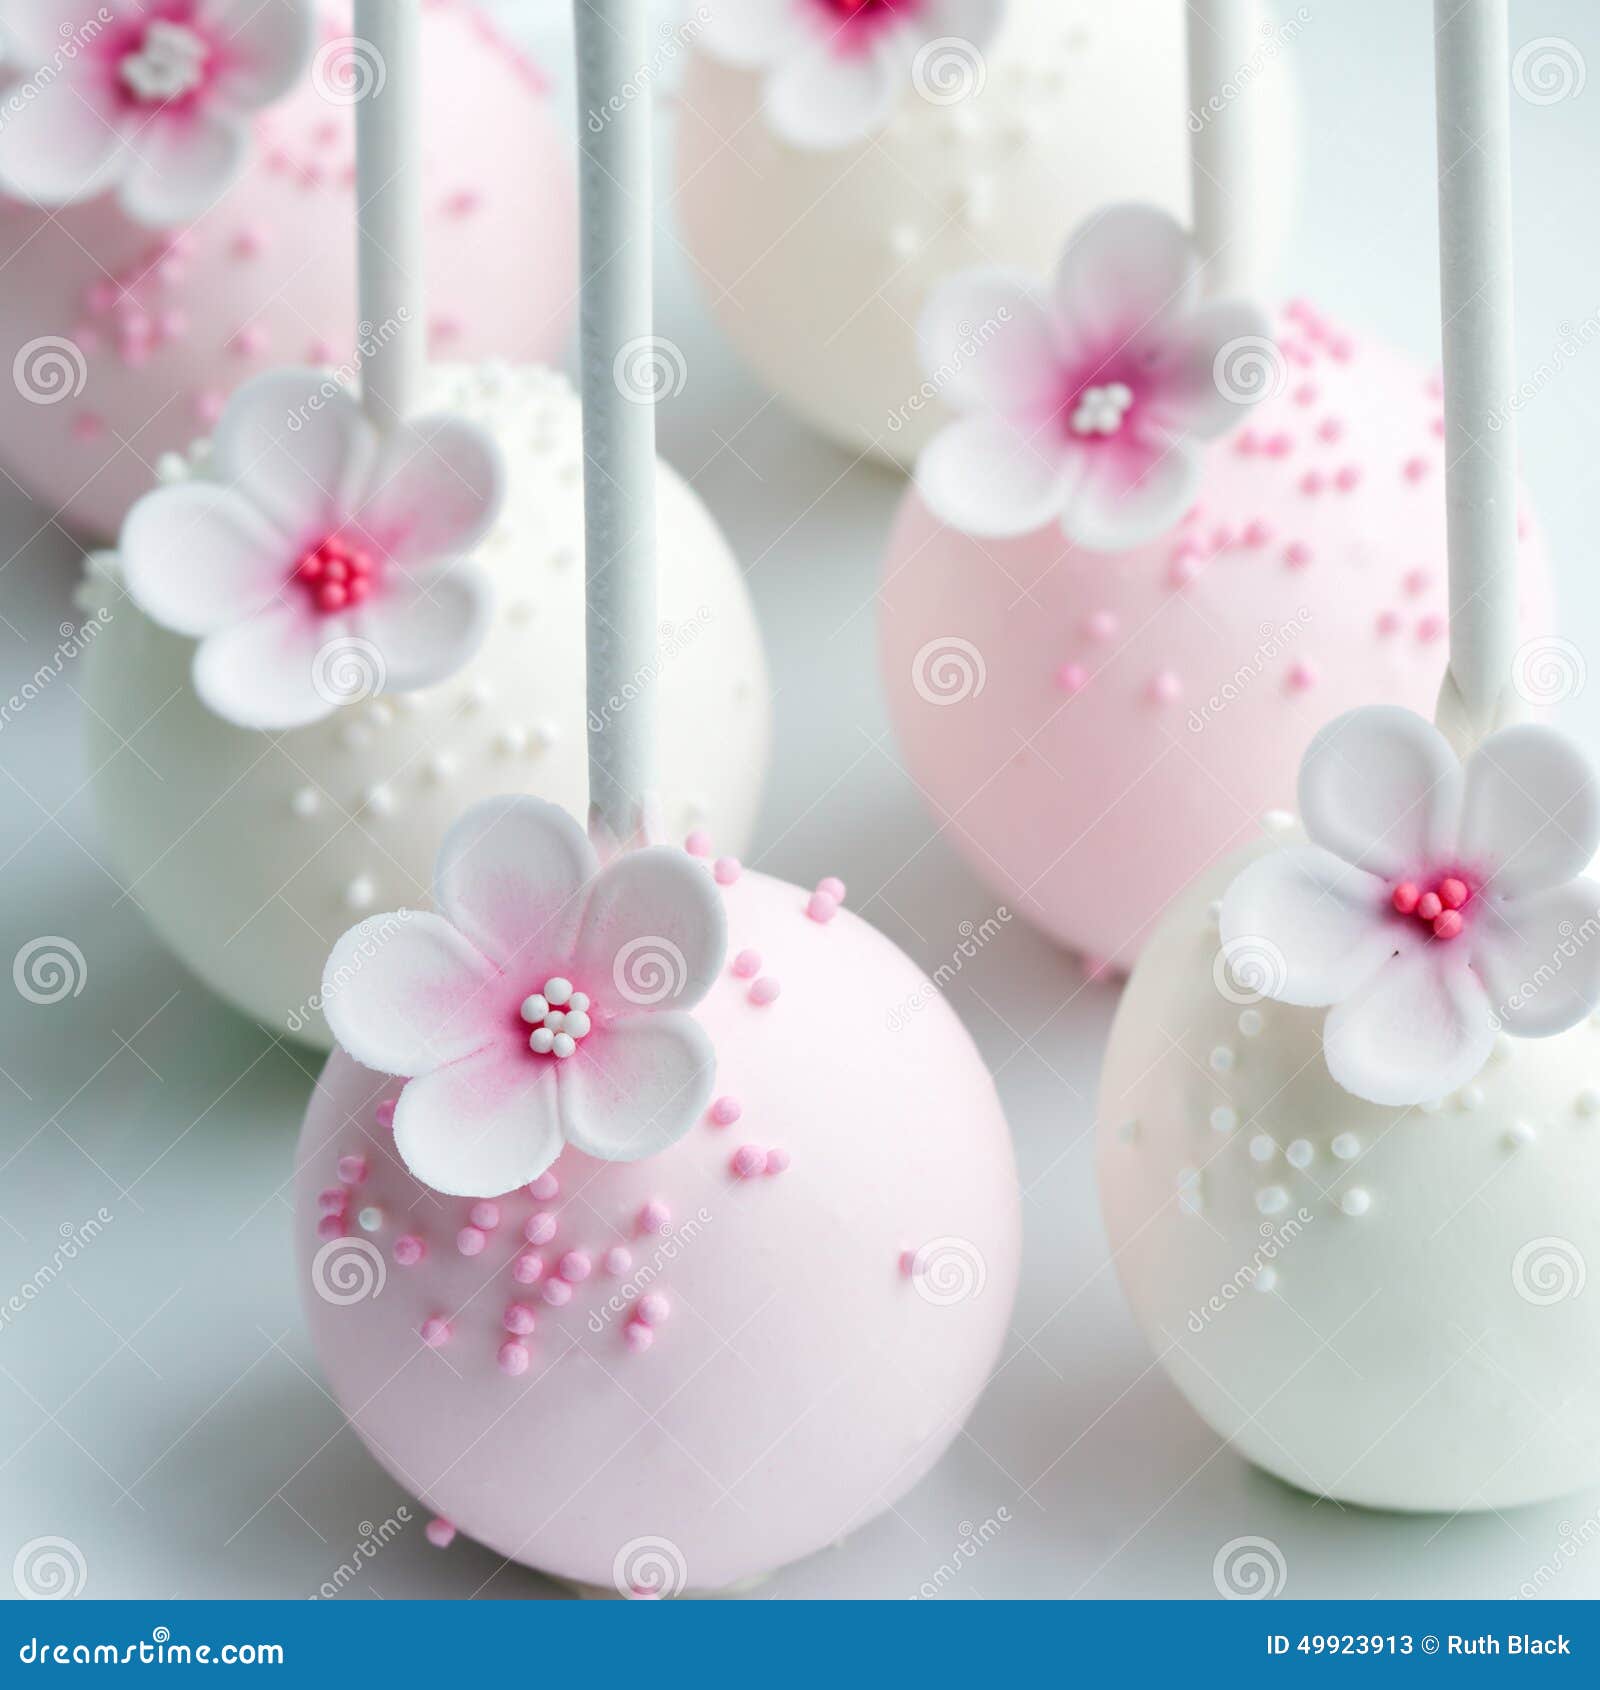  Wedding  cake  pops  stock image Image of cakepop buffet 